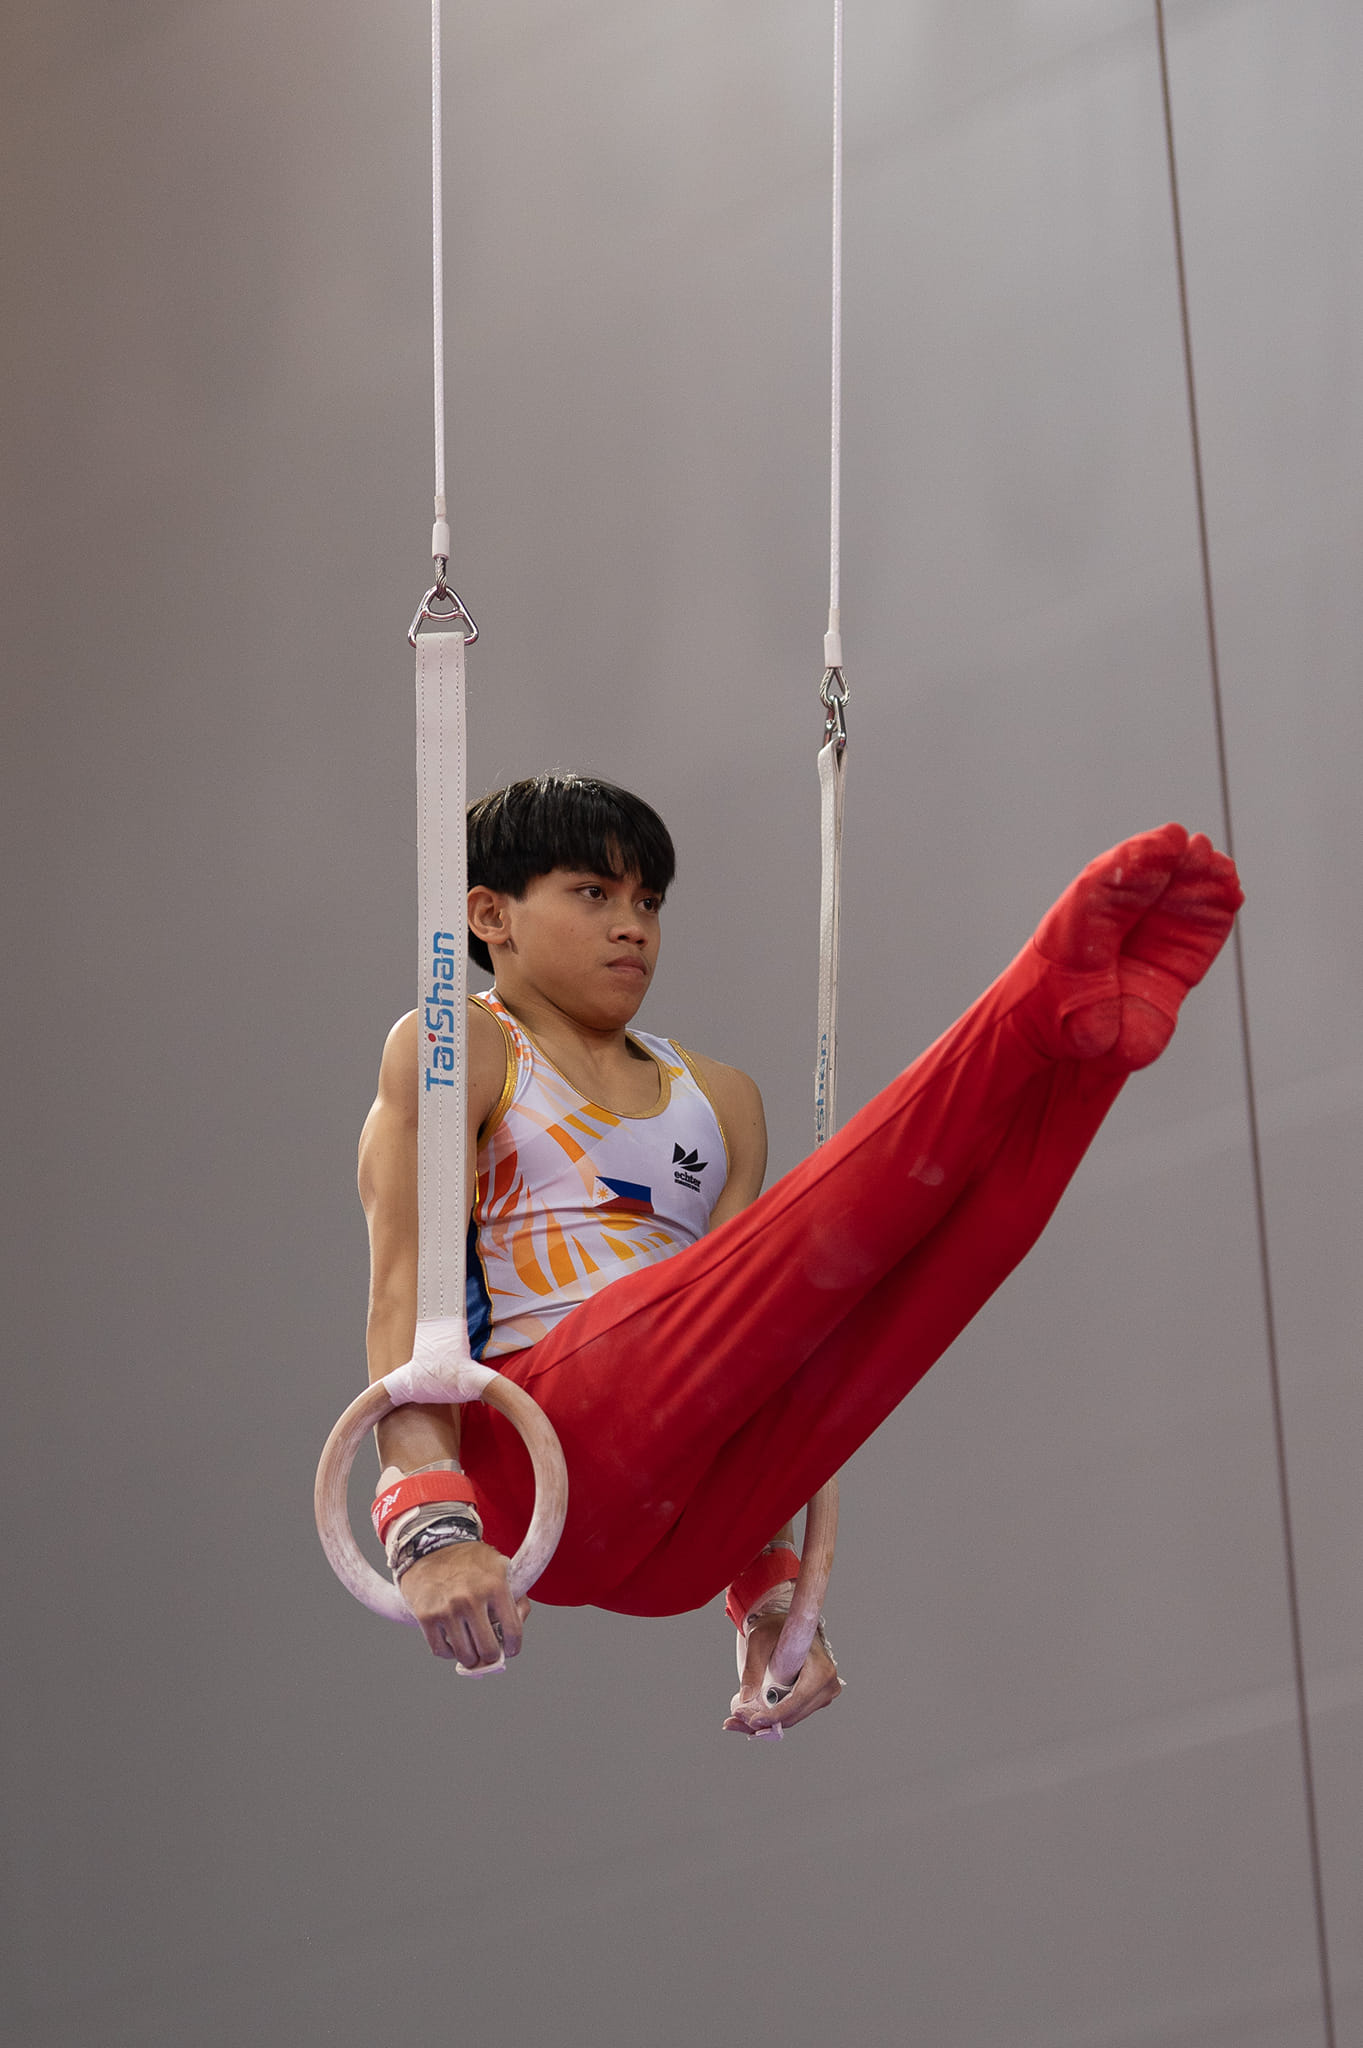 Filipino gymnast Karl Yulo